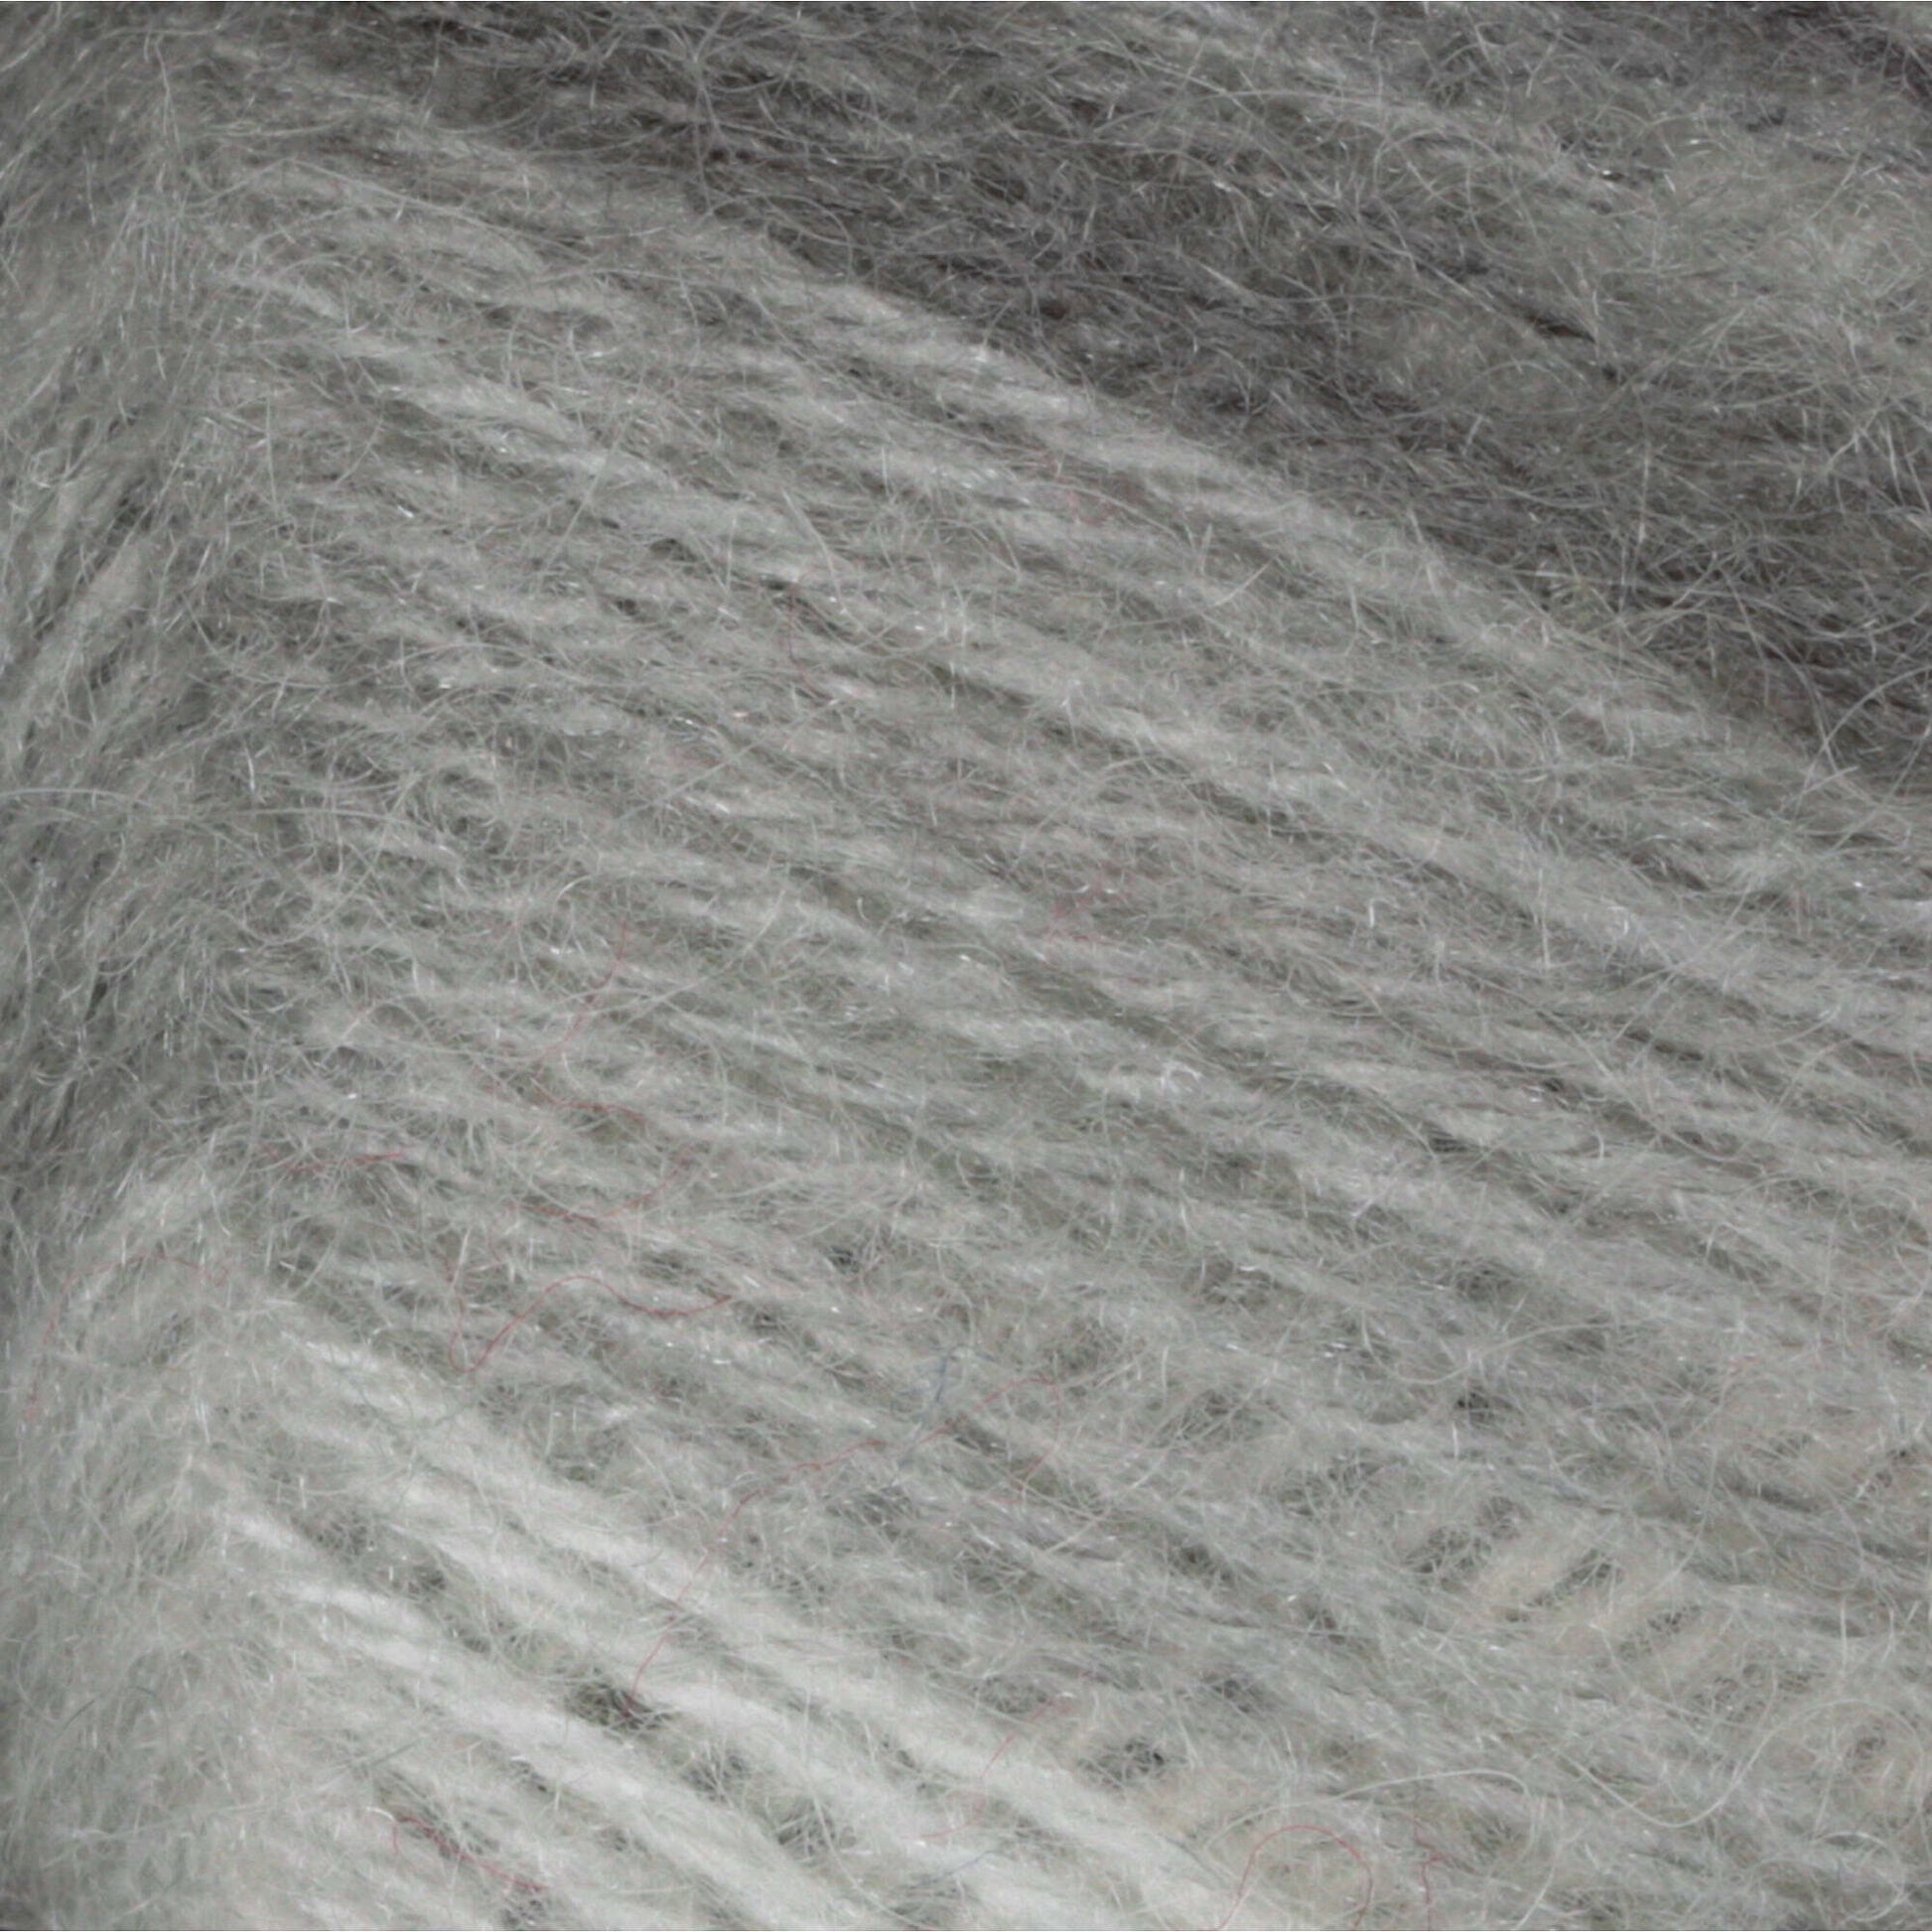 Patons Lace Yarn - Discontinued Patina